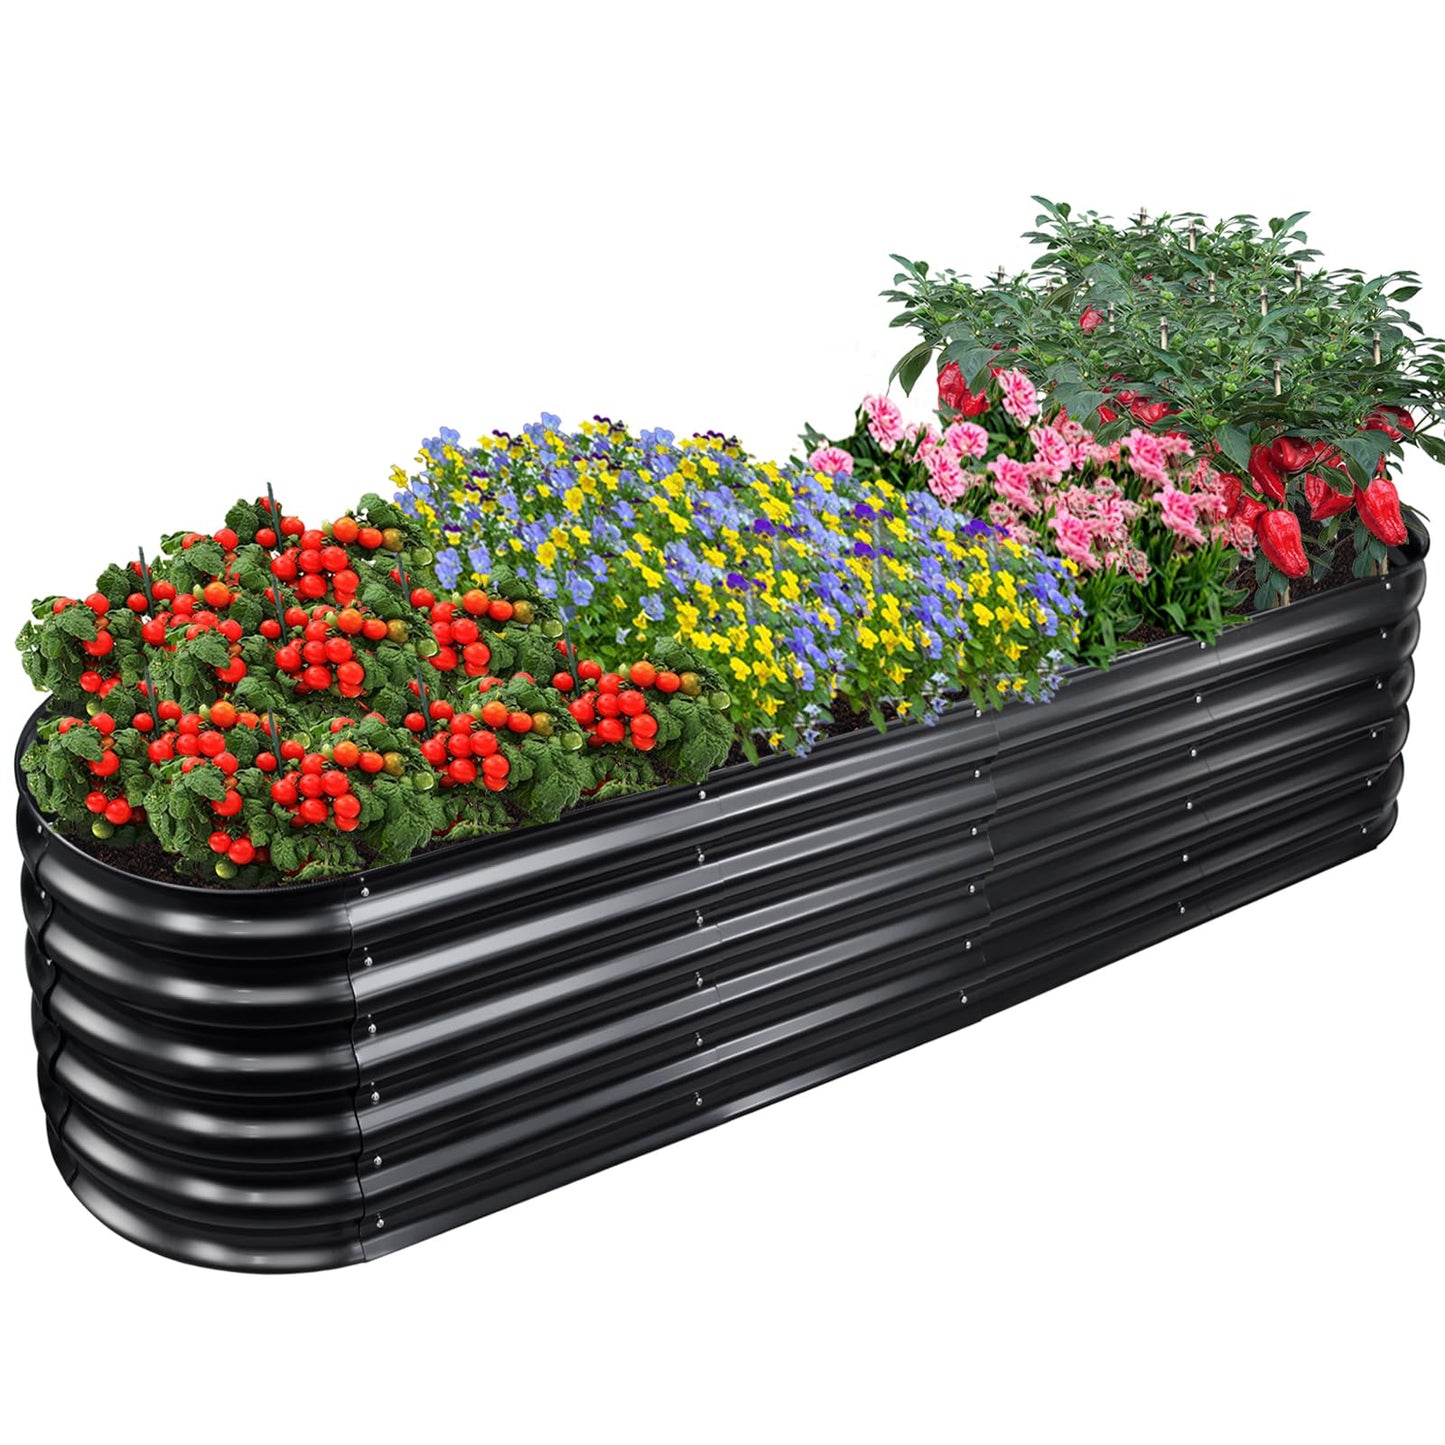 EDOSTORY 8x2x1.4ft Metal Raised Bed Garden Bed Kit, 17" Tall Galvanized Planter Raised Garden Boxes Outdoor, Large Metal Raised Garden Beds for Vegetables, Flowers, Herbs